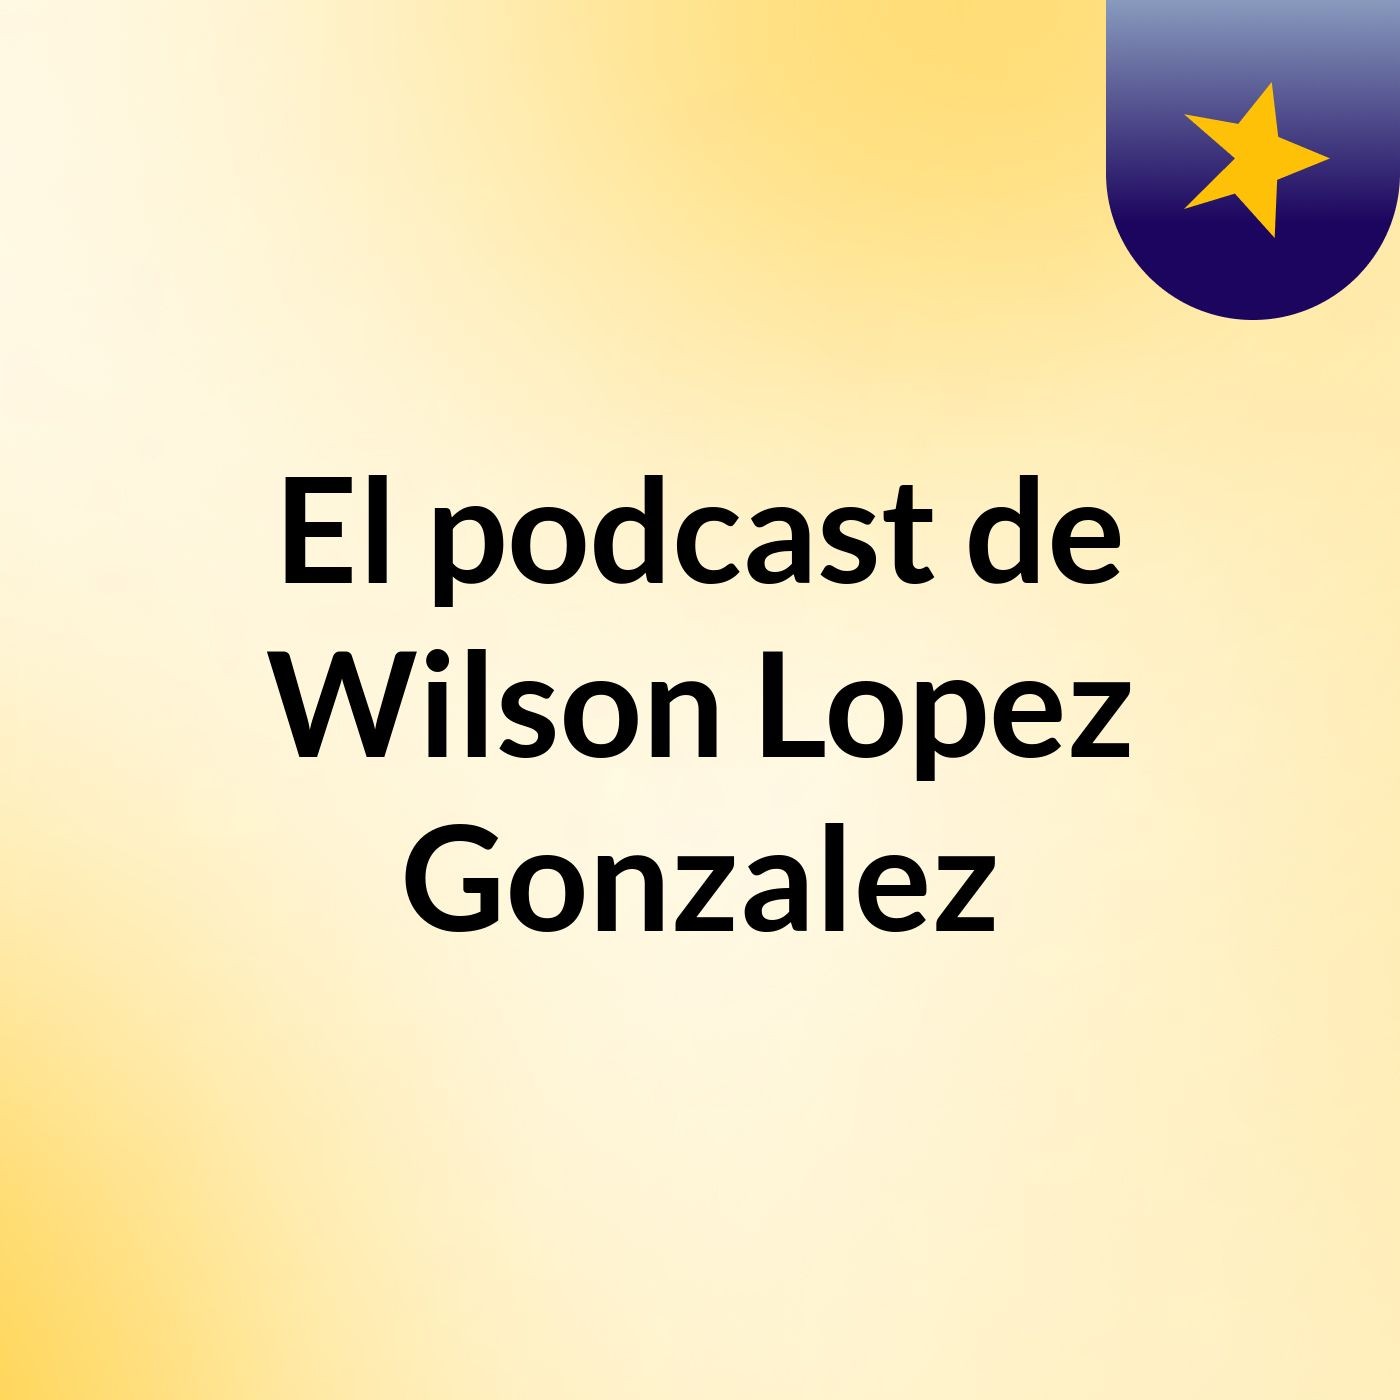 El podcast de Wilson Lopez Gonzalez